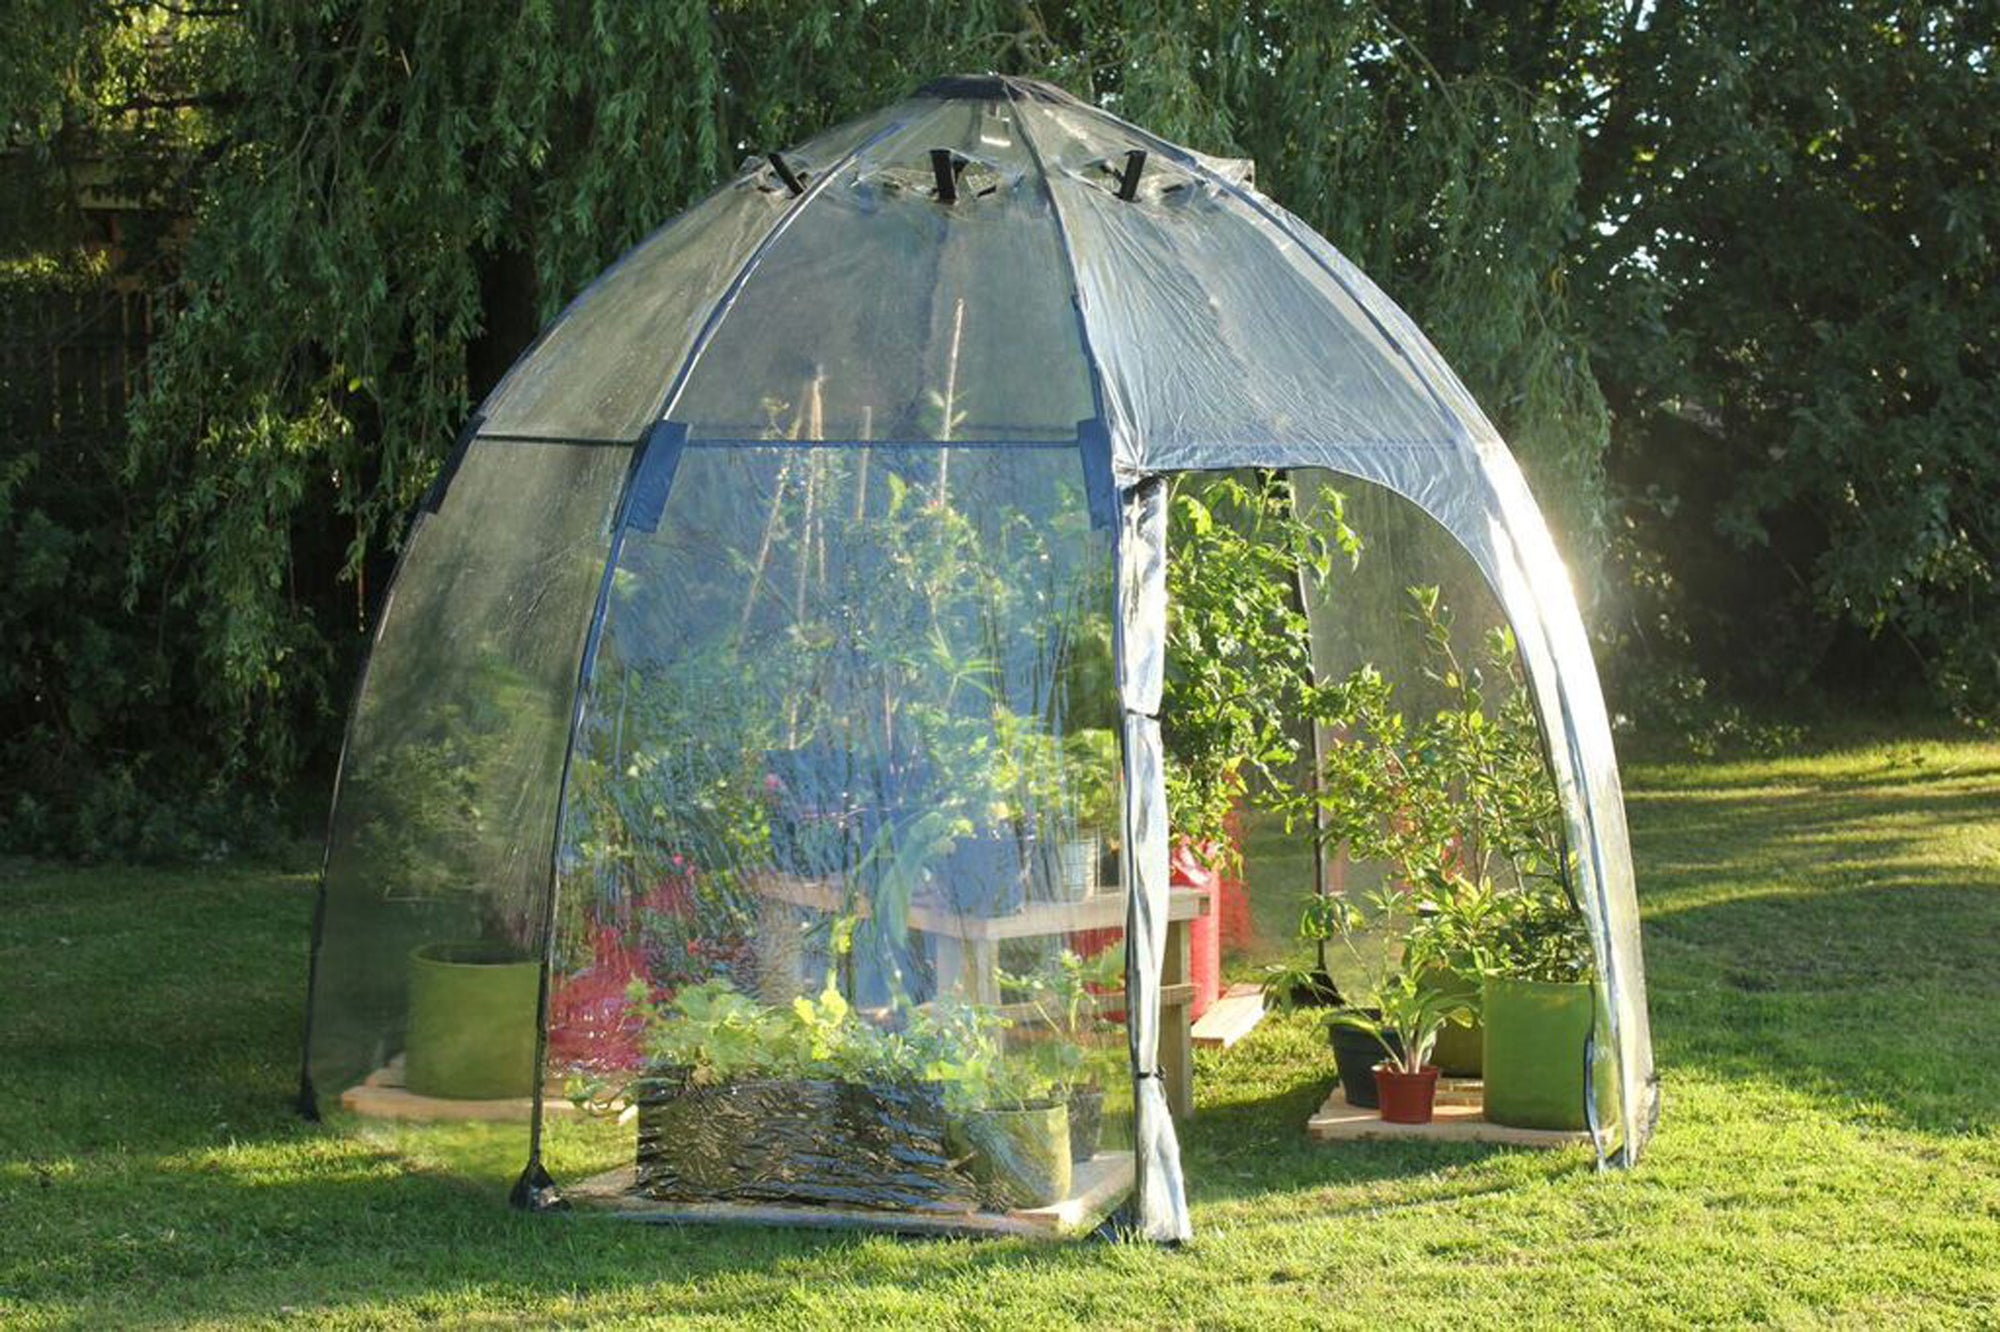 Sunbubble - the innovative greenhouse